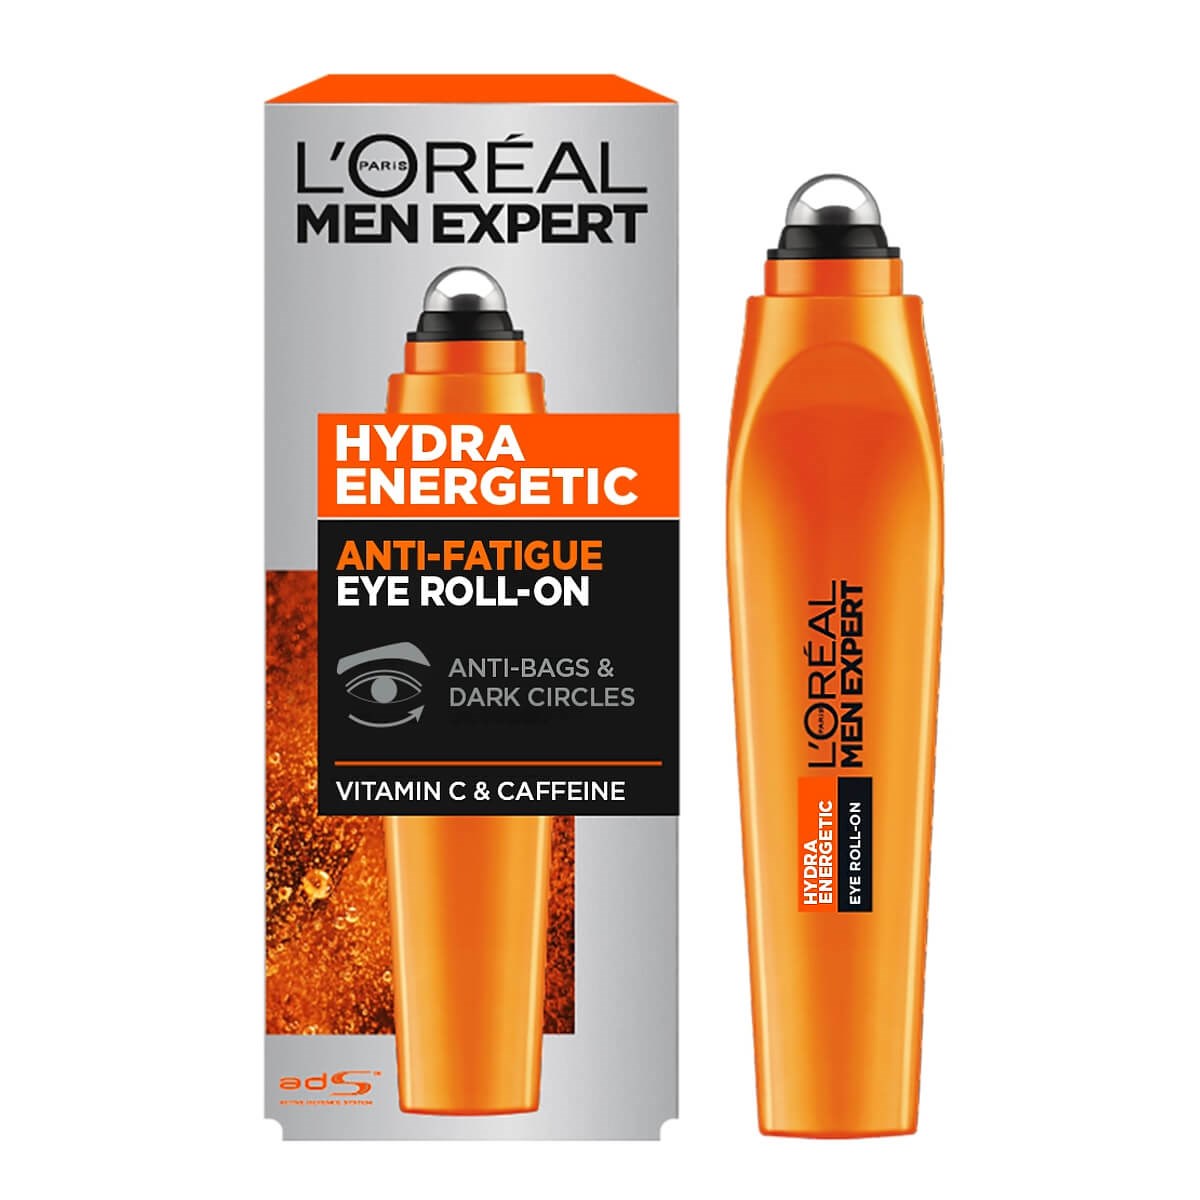 L'Oreal Men Expert Hydra Energetic Anti-Fatigue Eye Roll-On 10ml Image